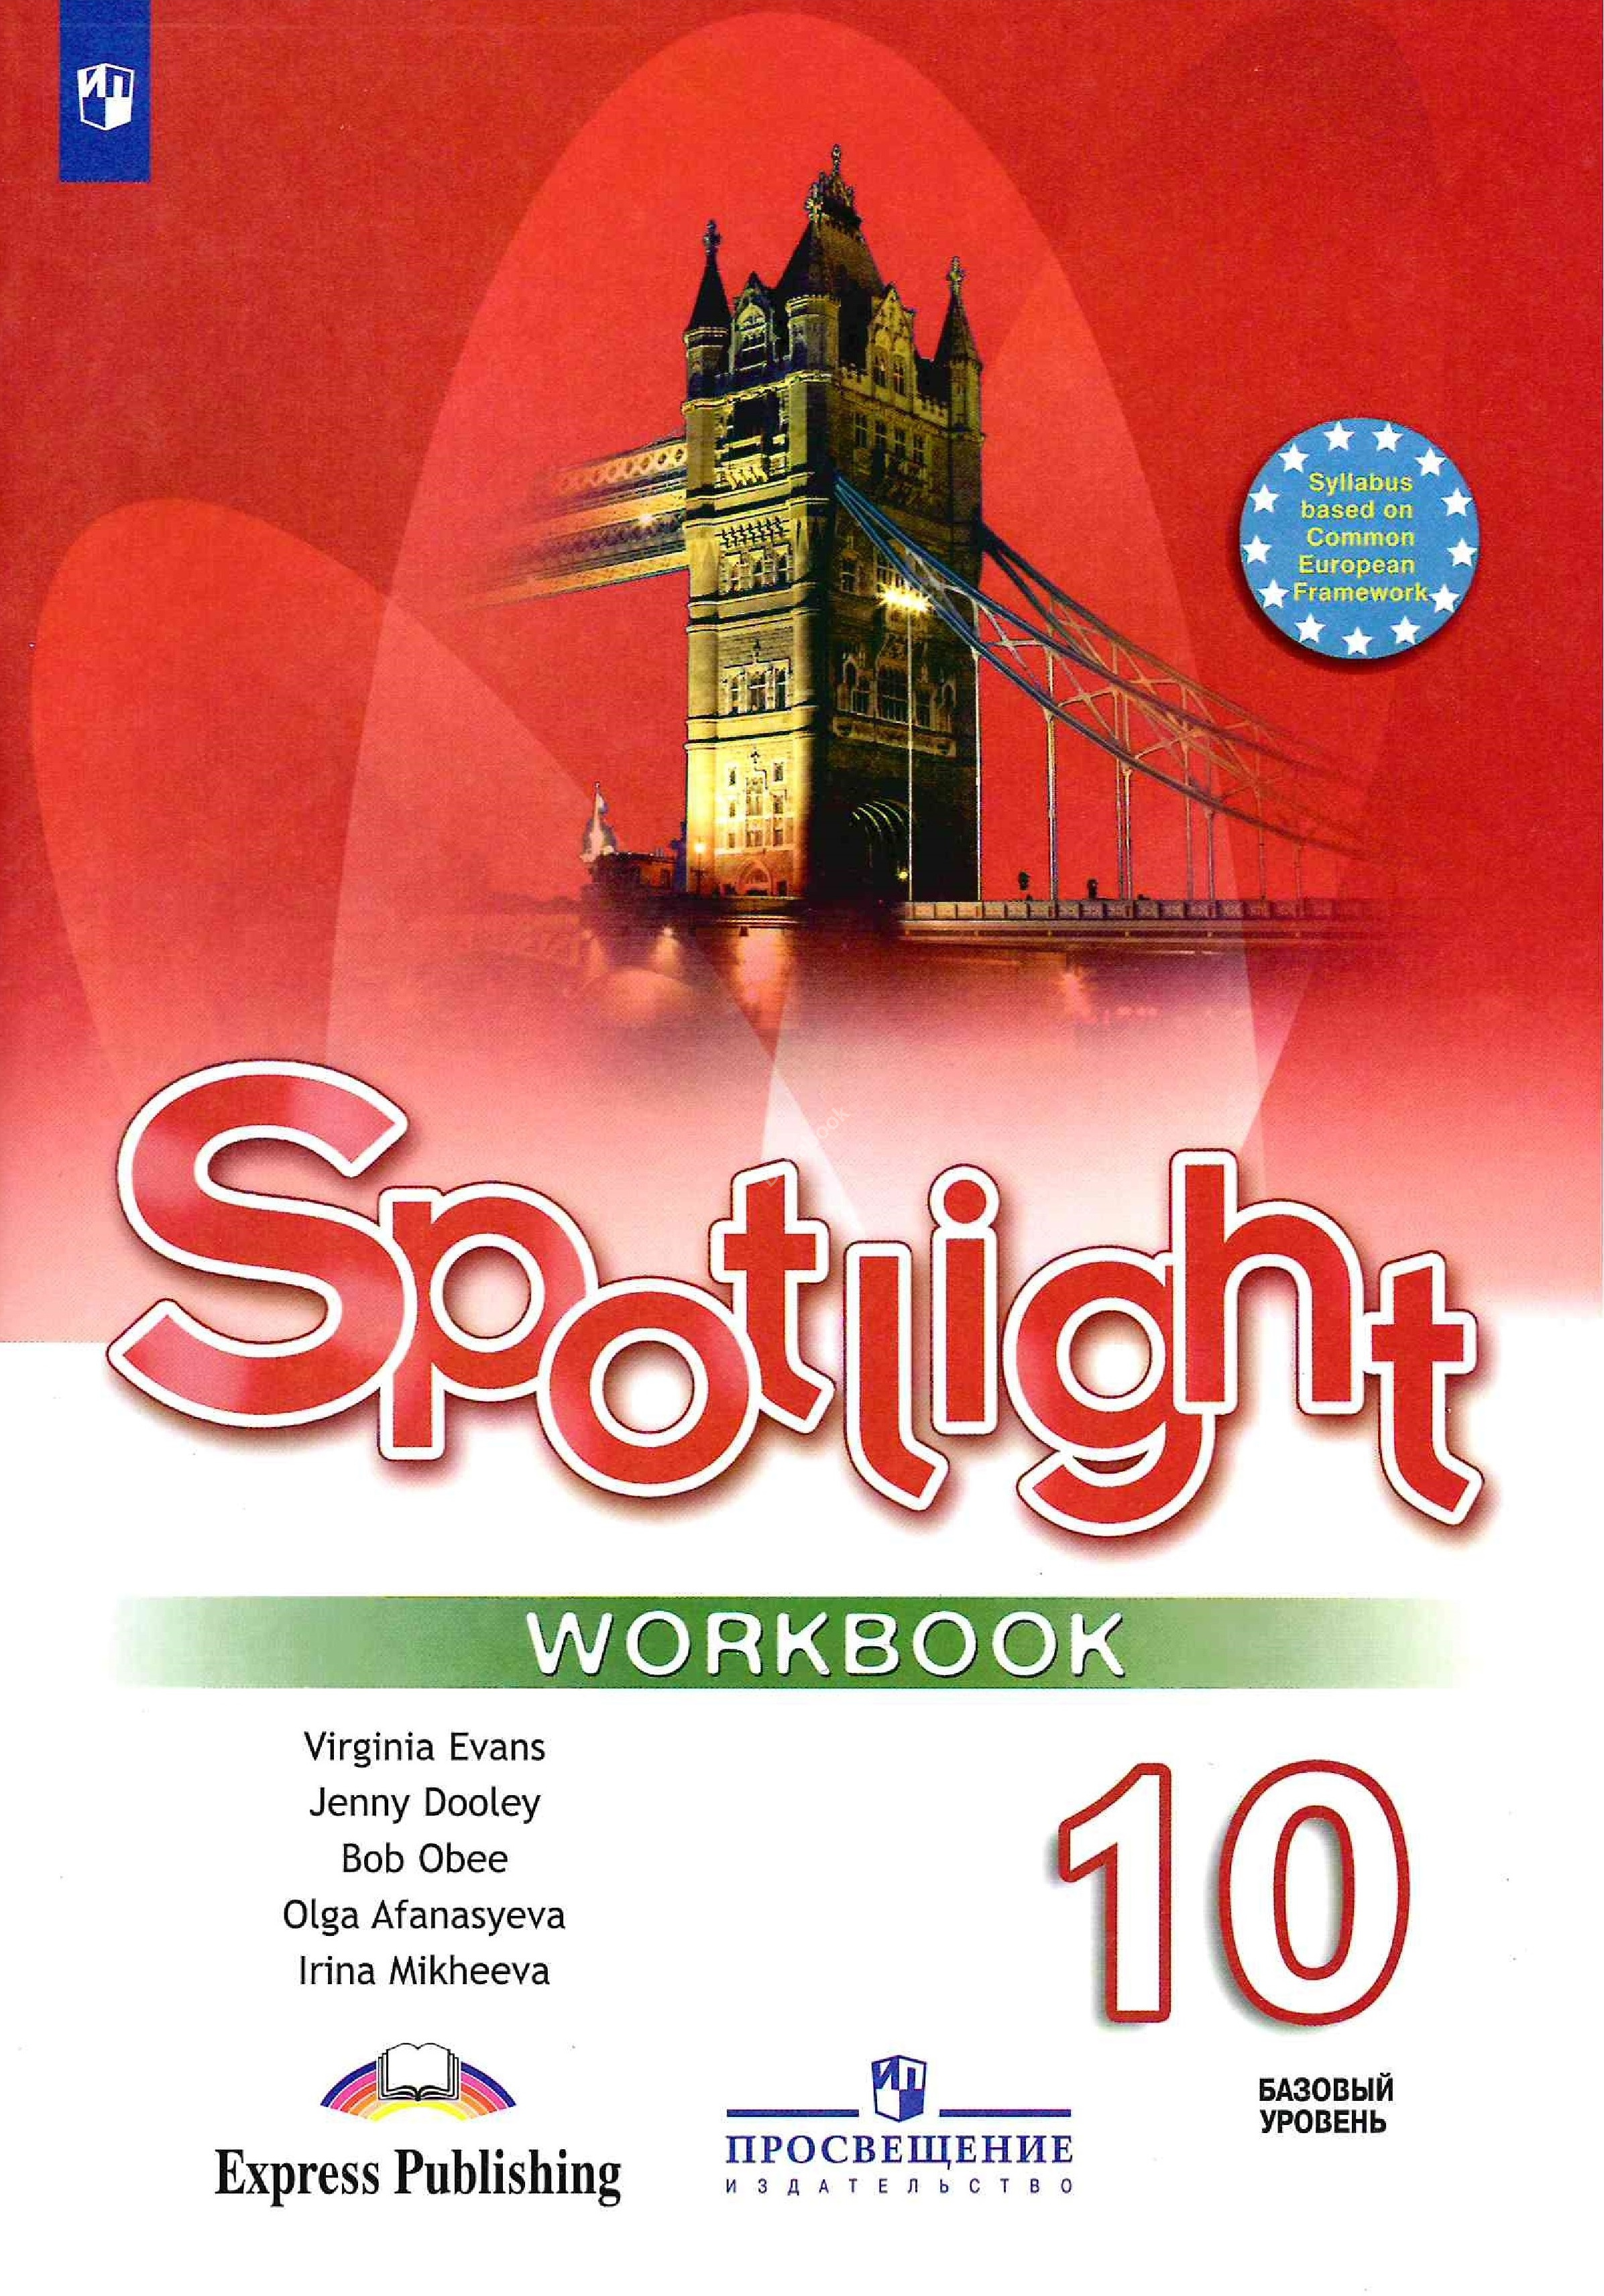 Spotlight teachers 9. Workbook Spotlight 5 класс ваулина. Spotlight 5 Workbook английский язык Эванс. Англ 5 класс рабочая тетрадь Spotlight. Тетради для английского языка 5 класс спотлайт.